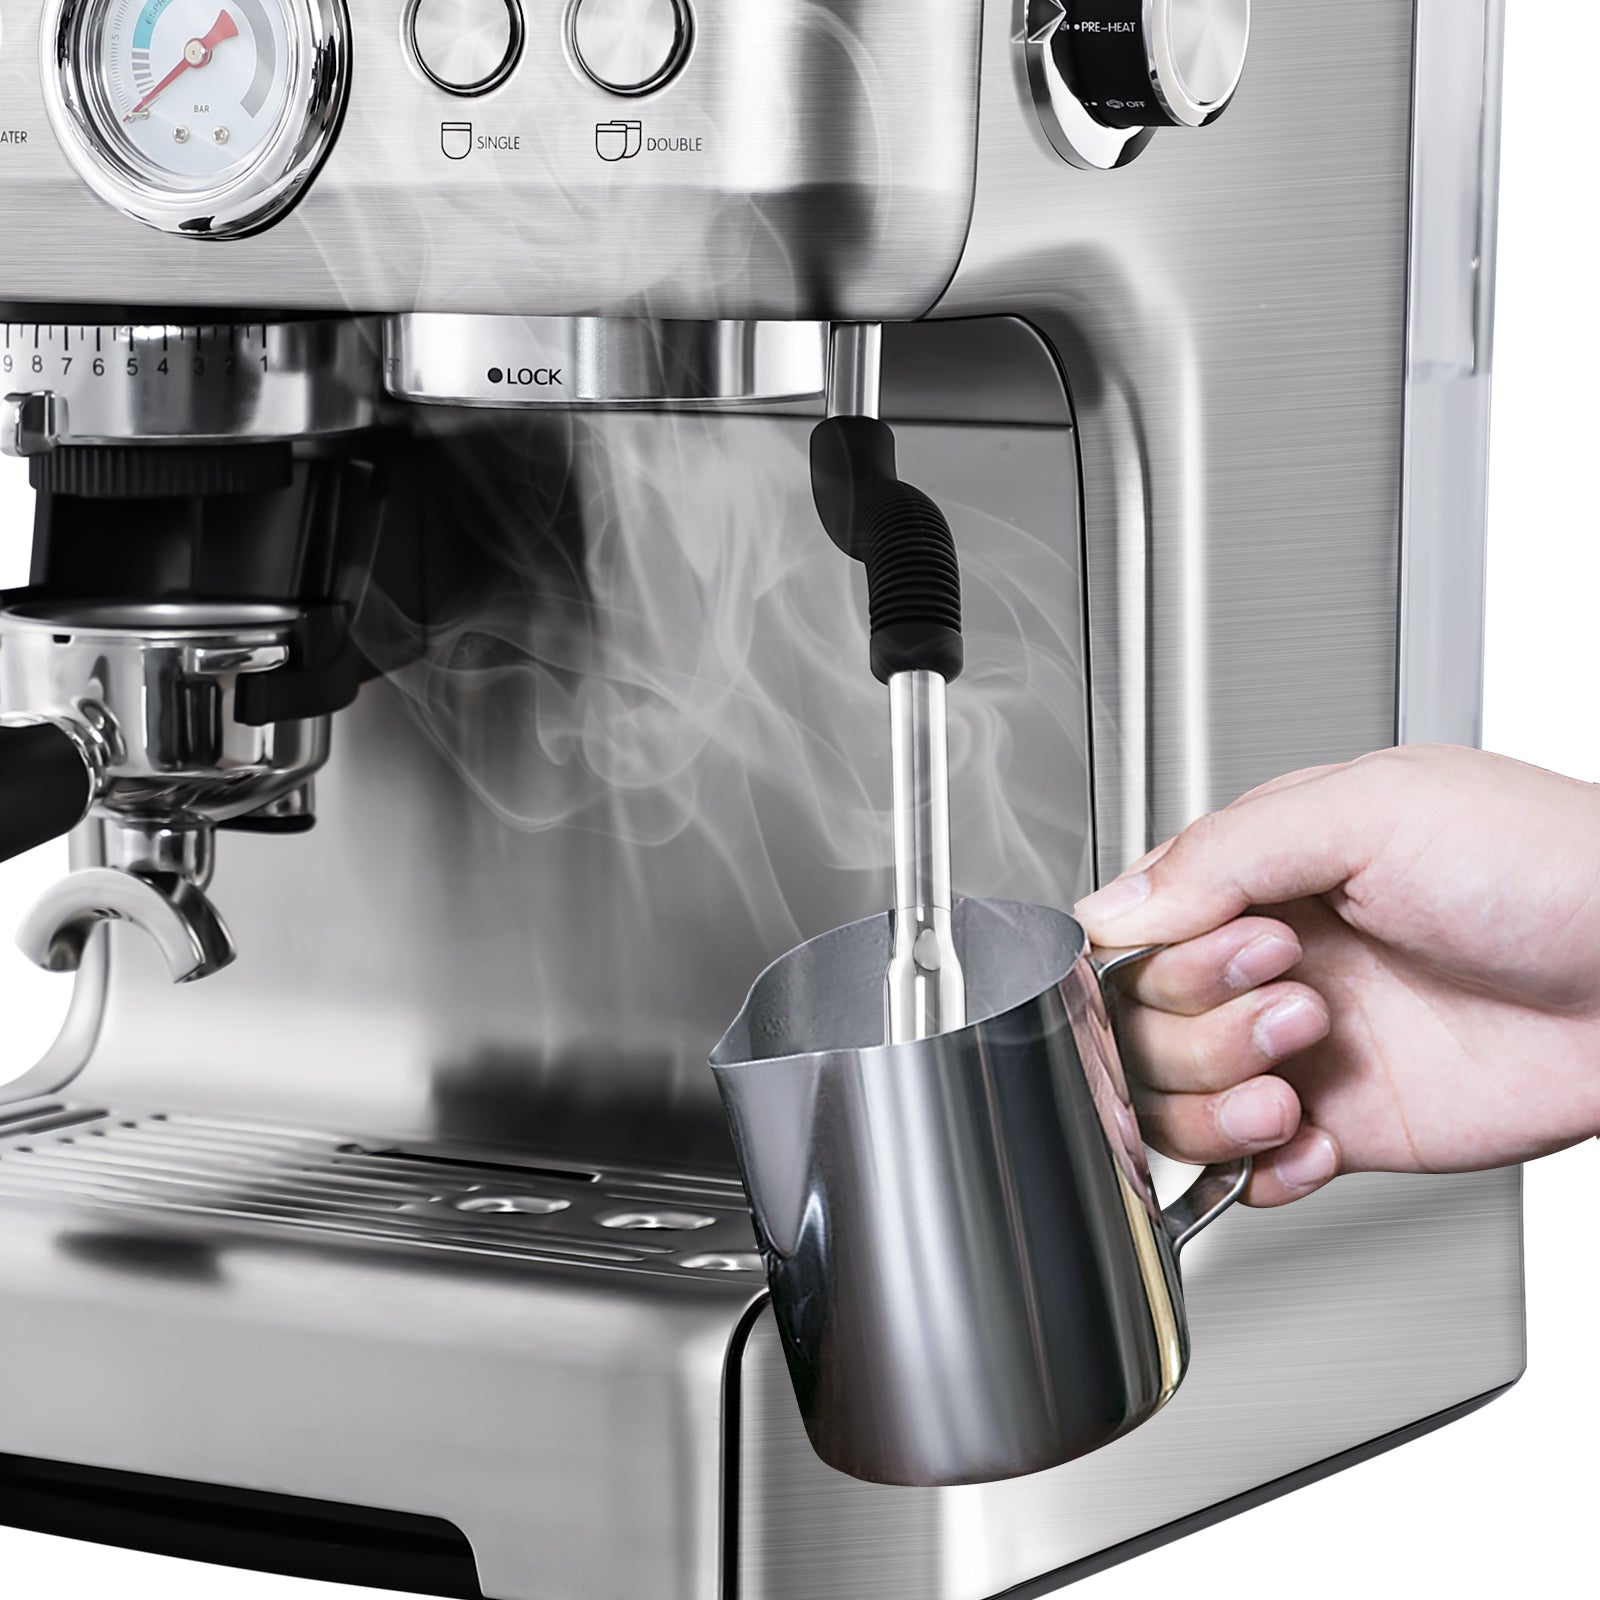 Casabrews Espresso Machine 5700 Series Stainless steel milk frothing cup